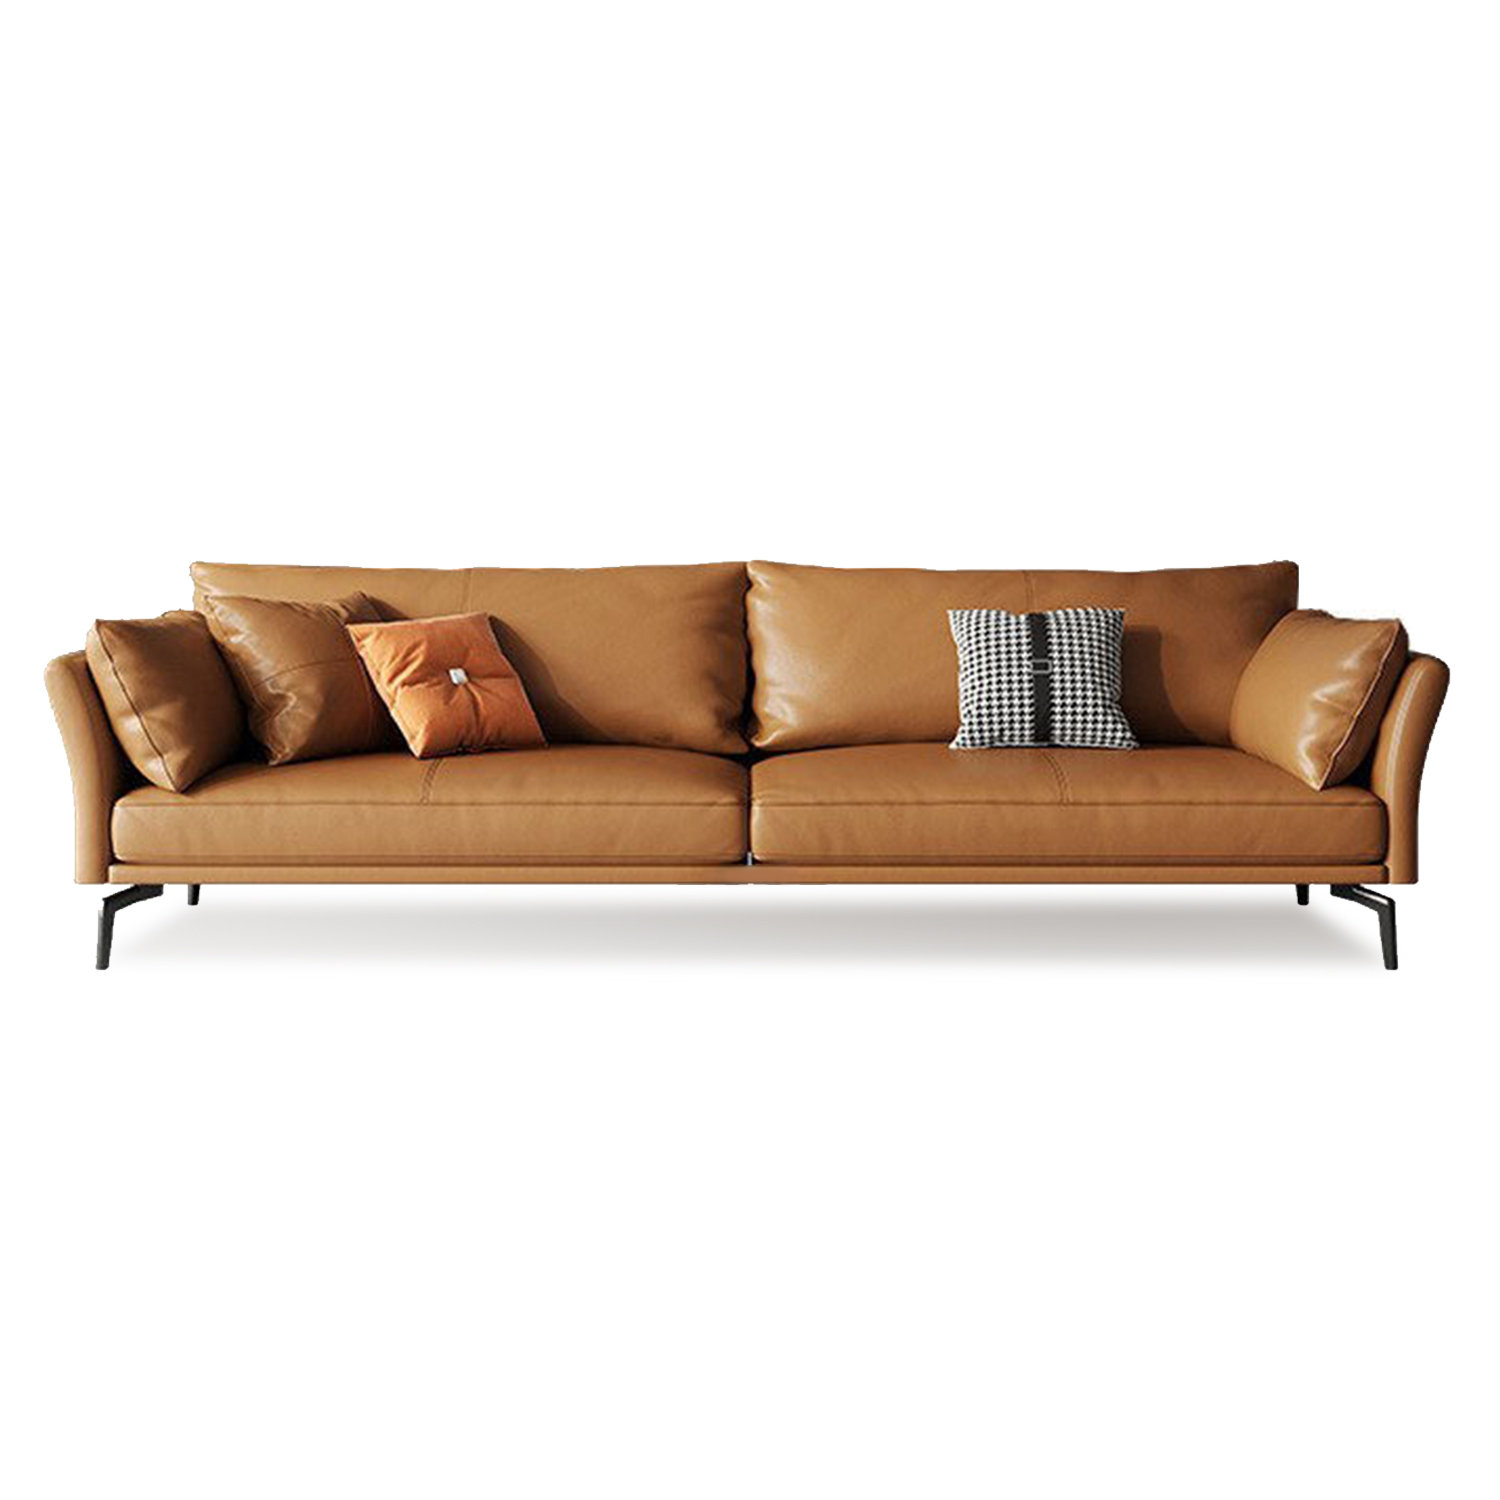 70.08 Genuine Leather Standard Sofa Cushion Loveseat Corrigan Studio Fabric: Dark Gray Genuine Leather